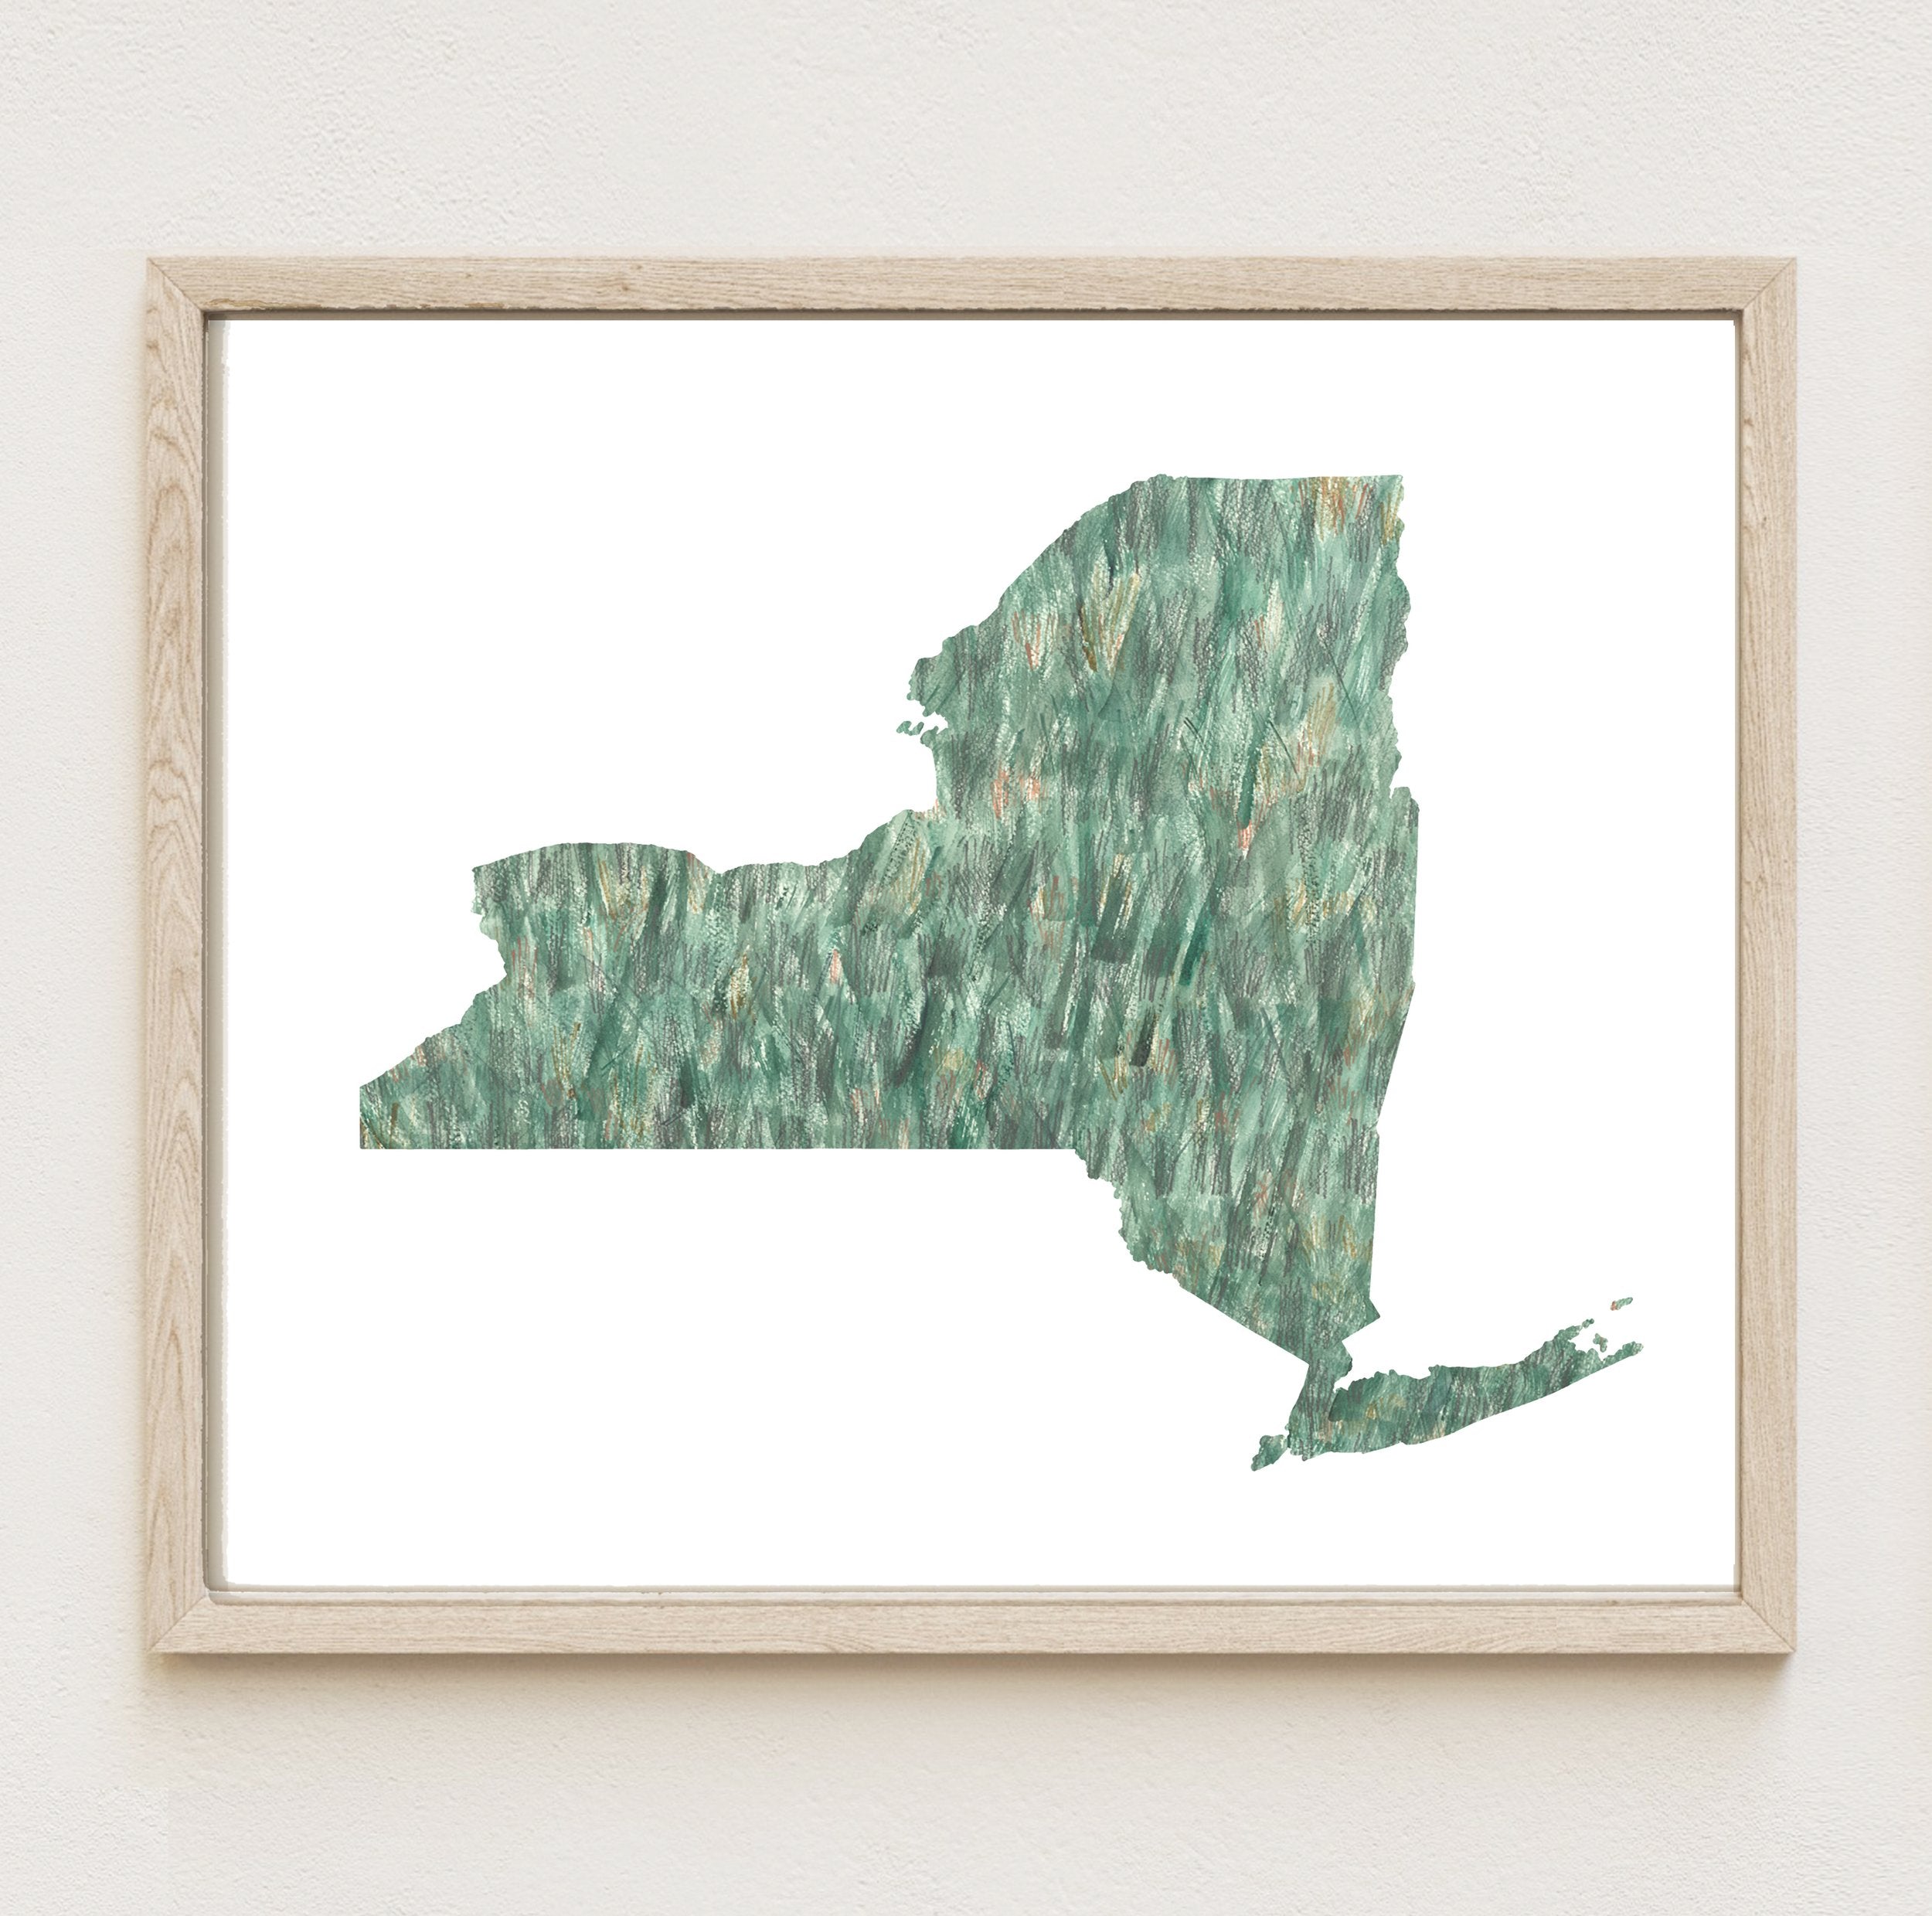 NEW YORK State Map: PRINT